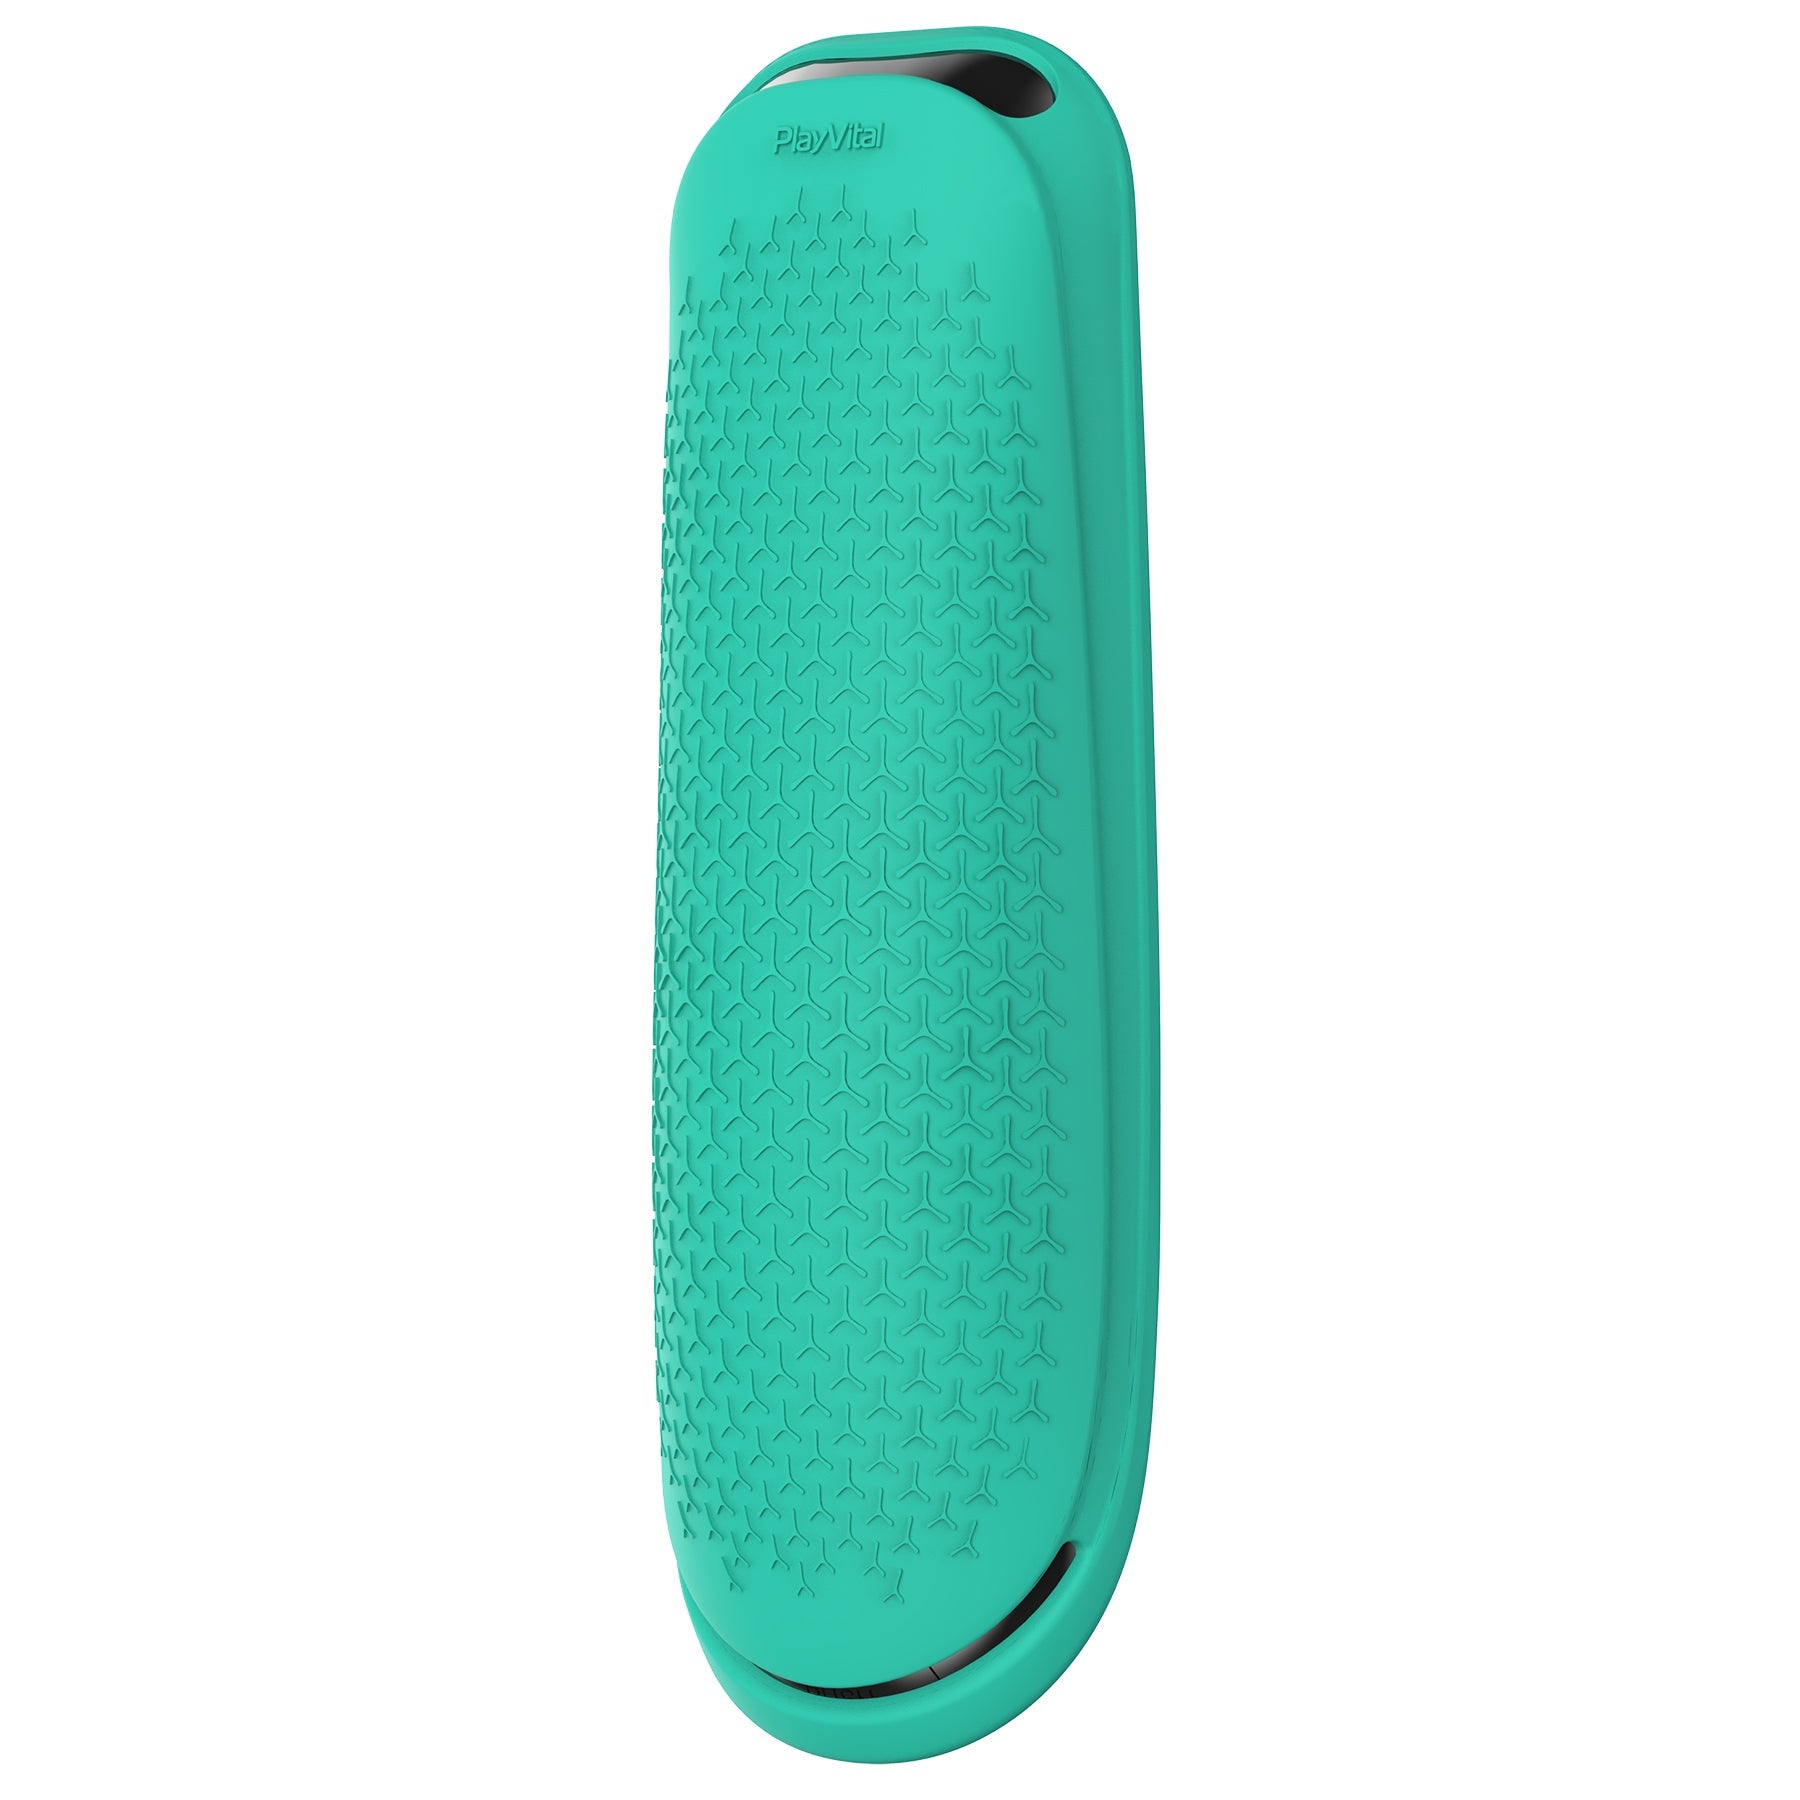 PlayVital Aqua Green Silicone Protective Remote Case for PS5 Media Remote Cover, Ergonomic Design Full Body Protector Skin for PS5 Remote Control - PFPJ075 PlayVital